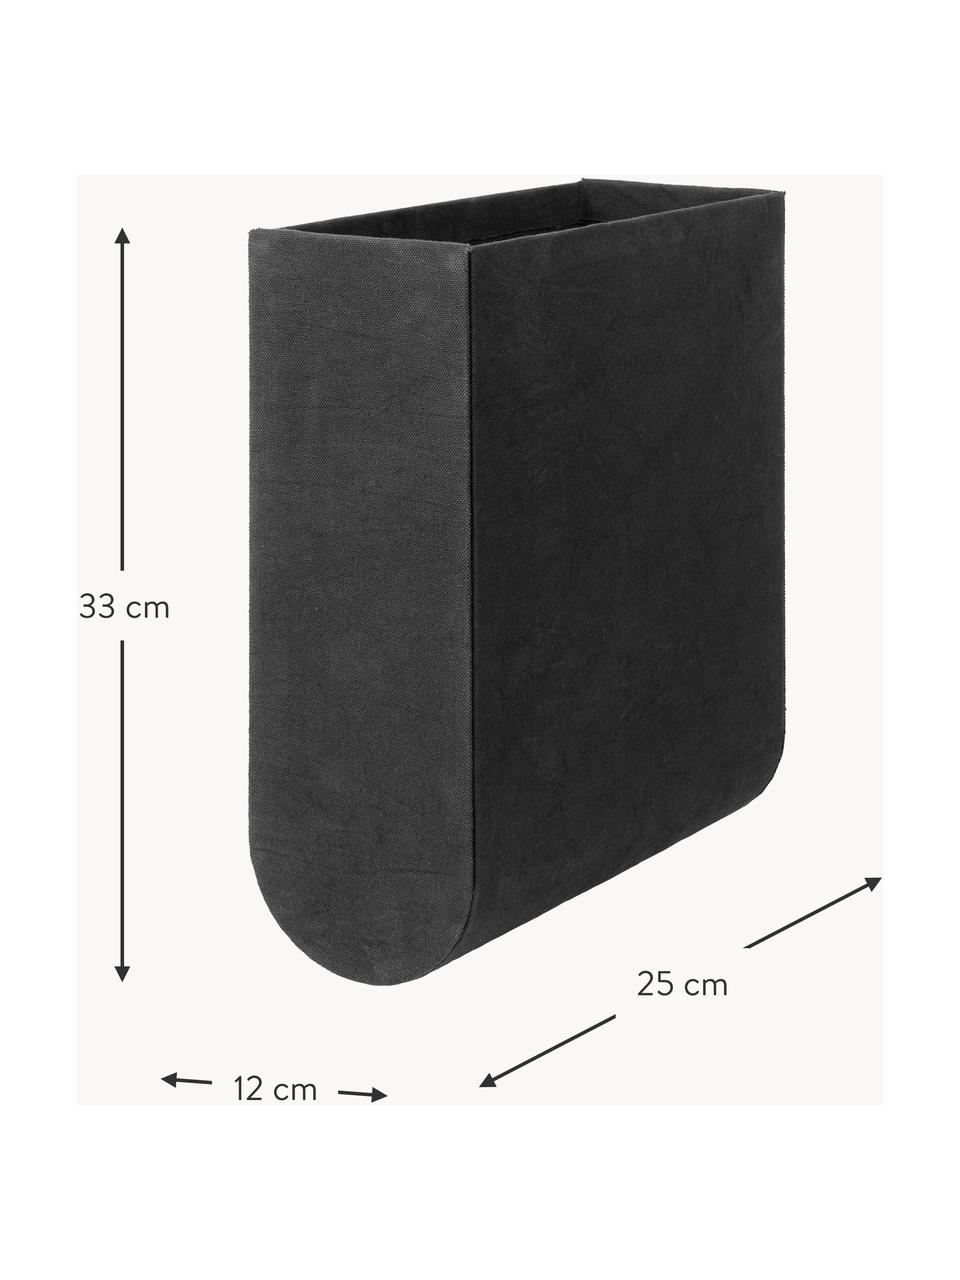 Ručně vyrobený skladovací box Curved, Černá, Š 12 cm, V 33 cm